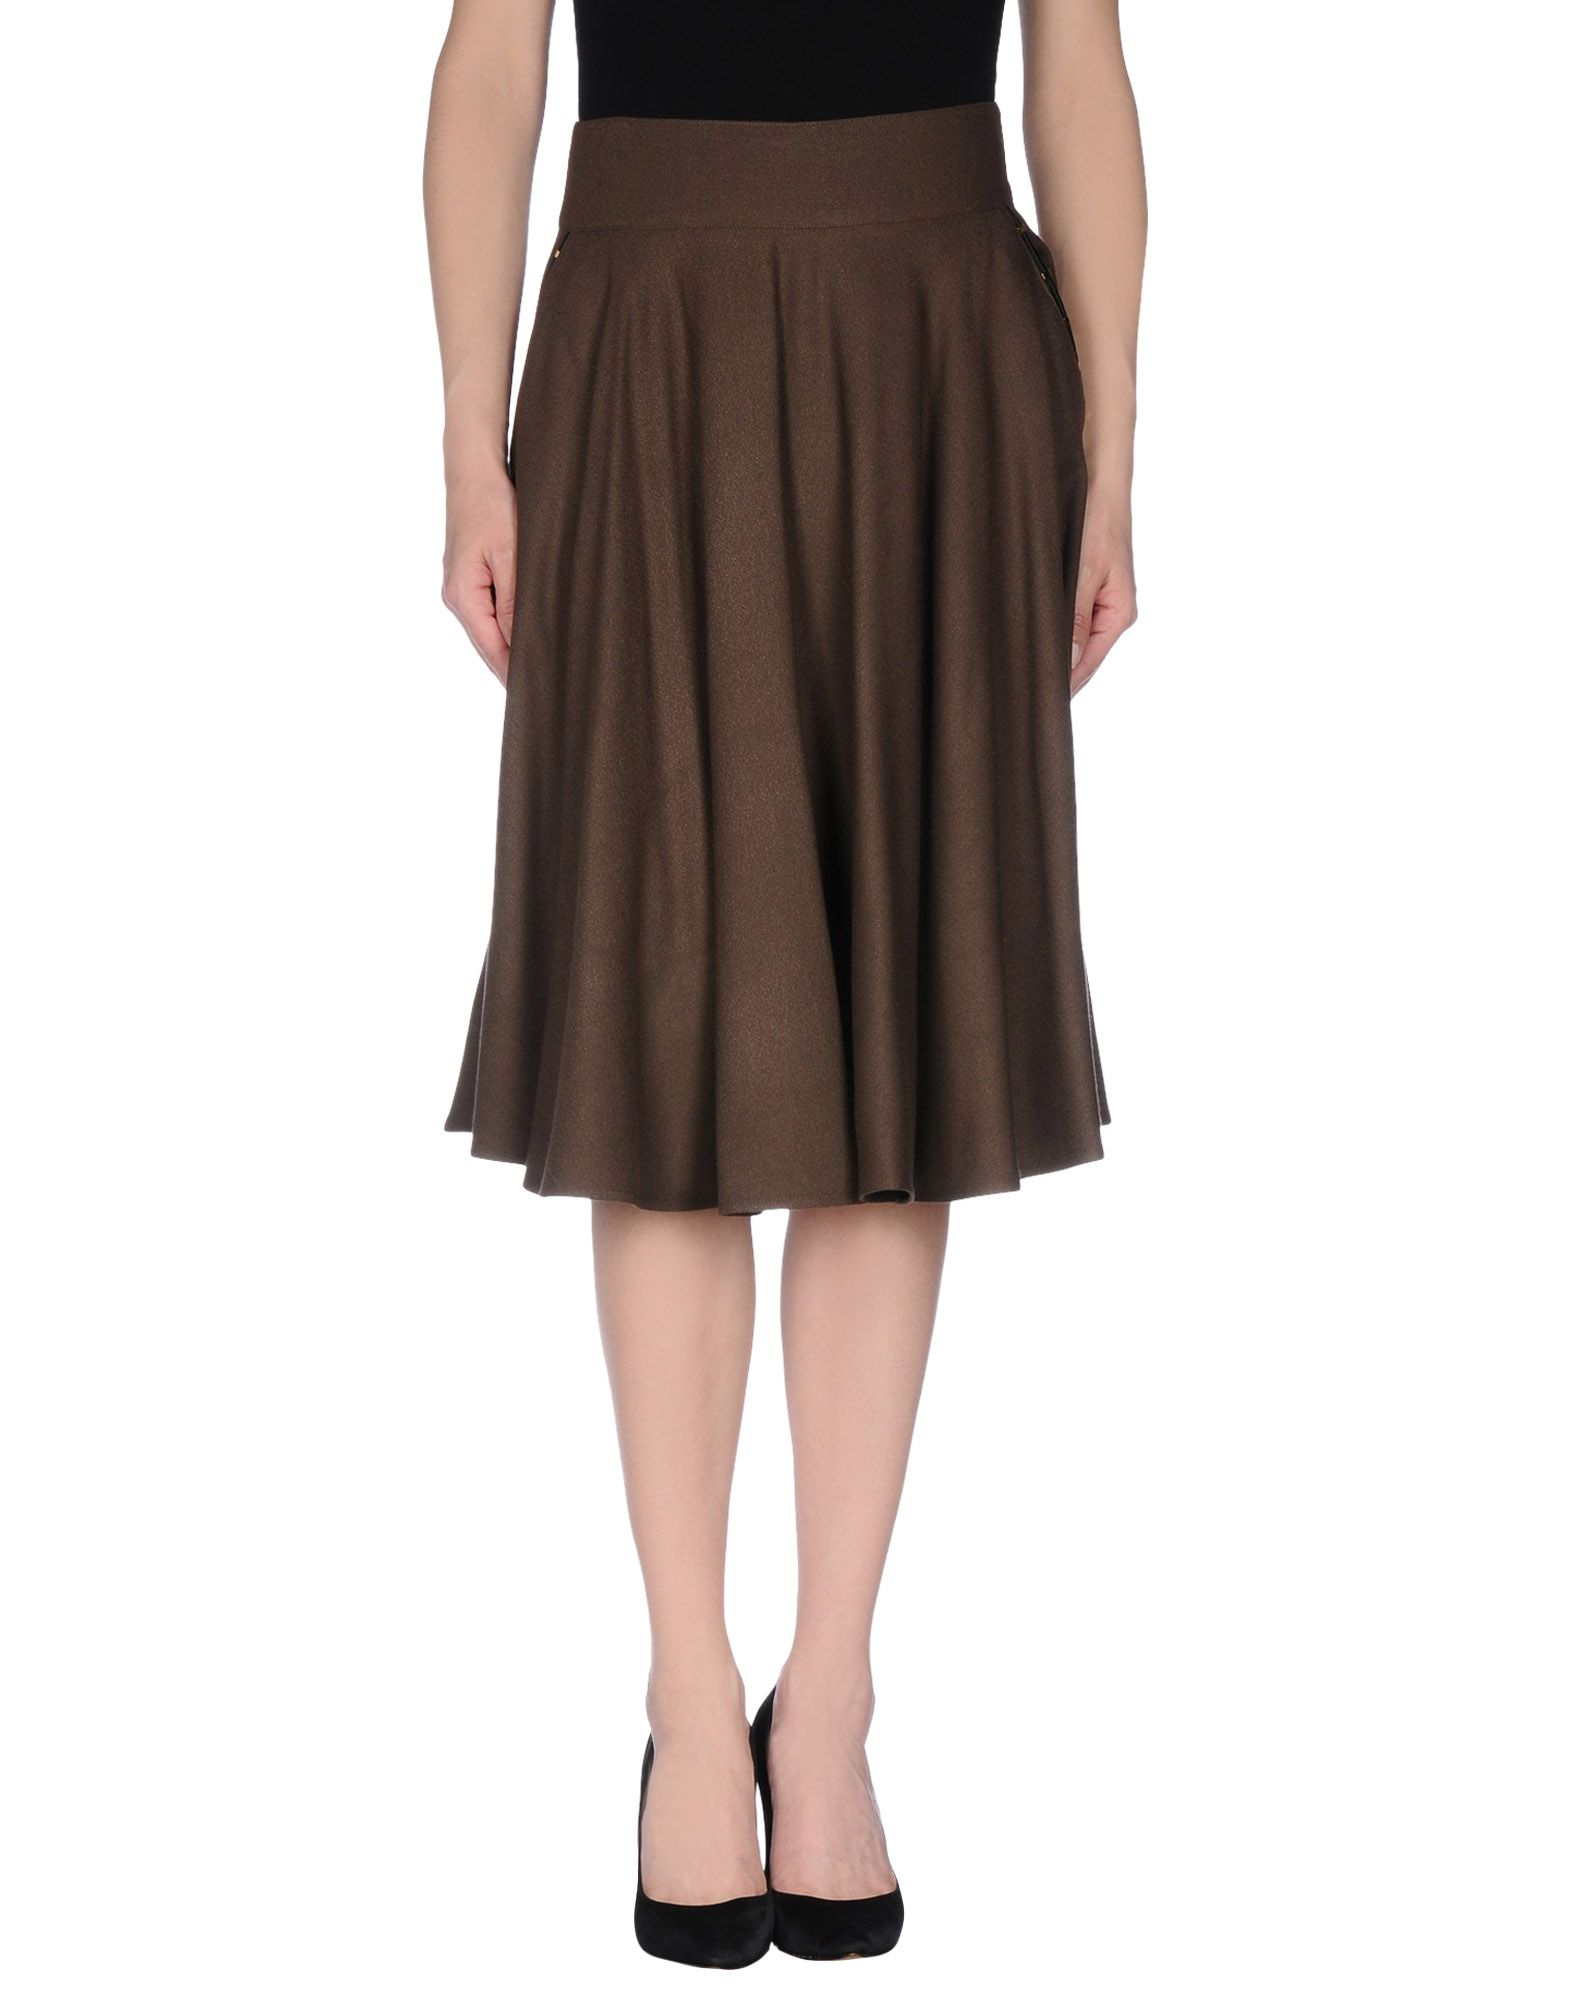 Lyst - Class Roberto Cavalli Knee Length Skirt in Brown